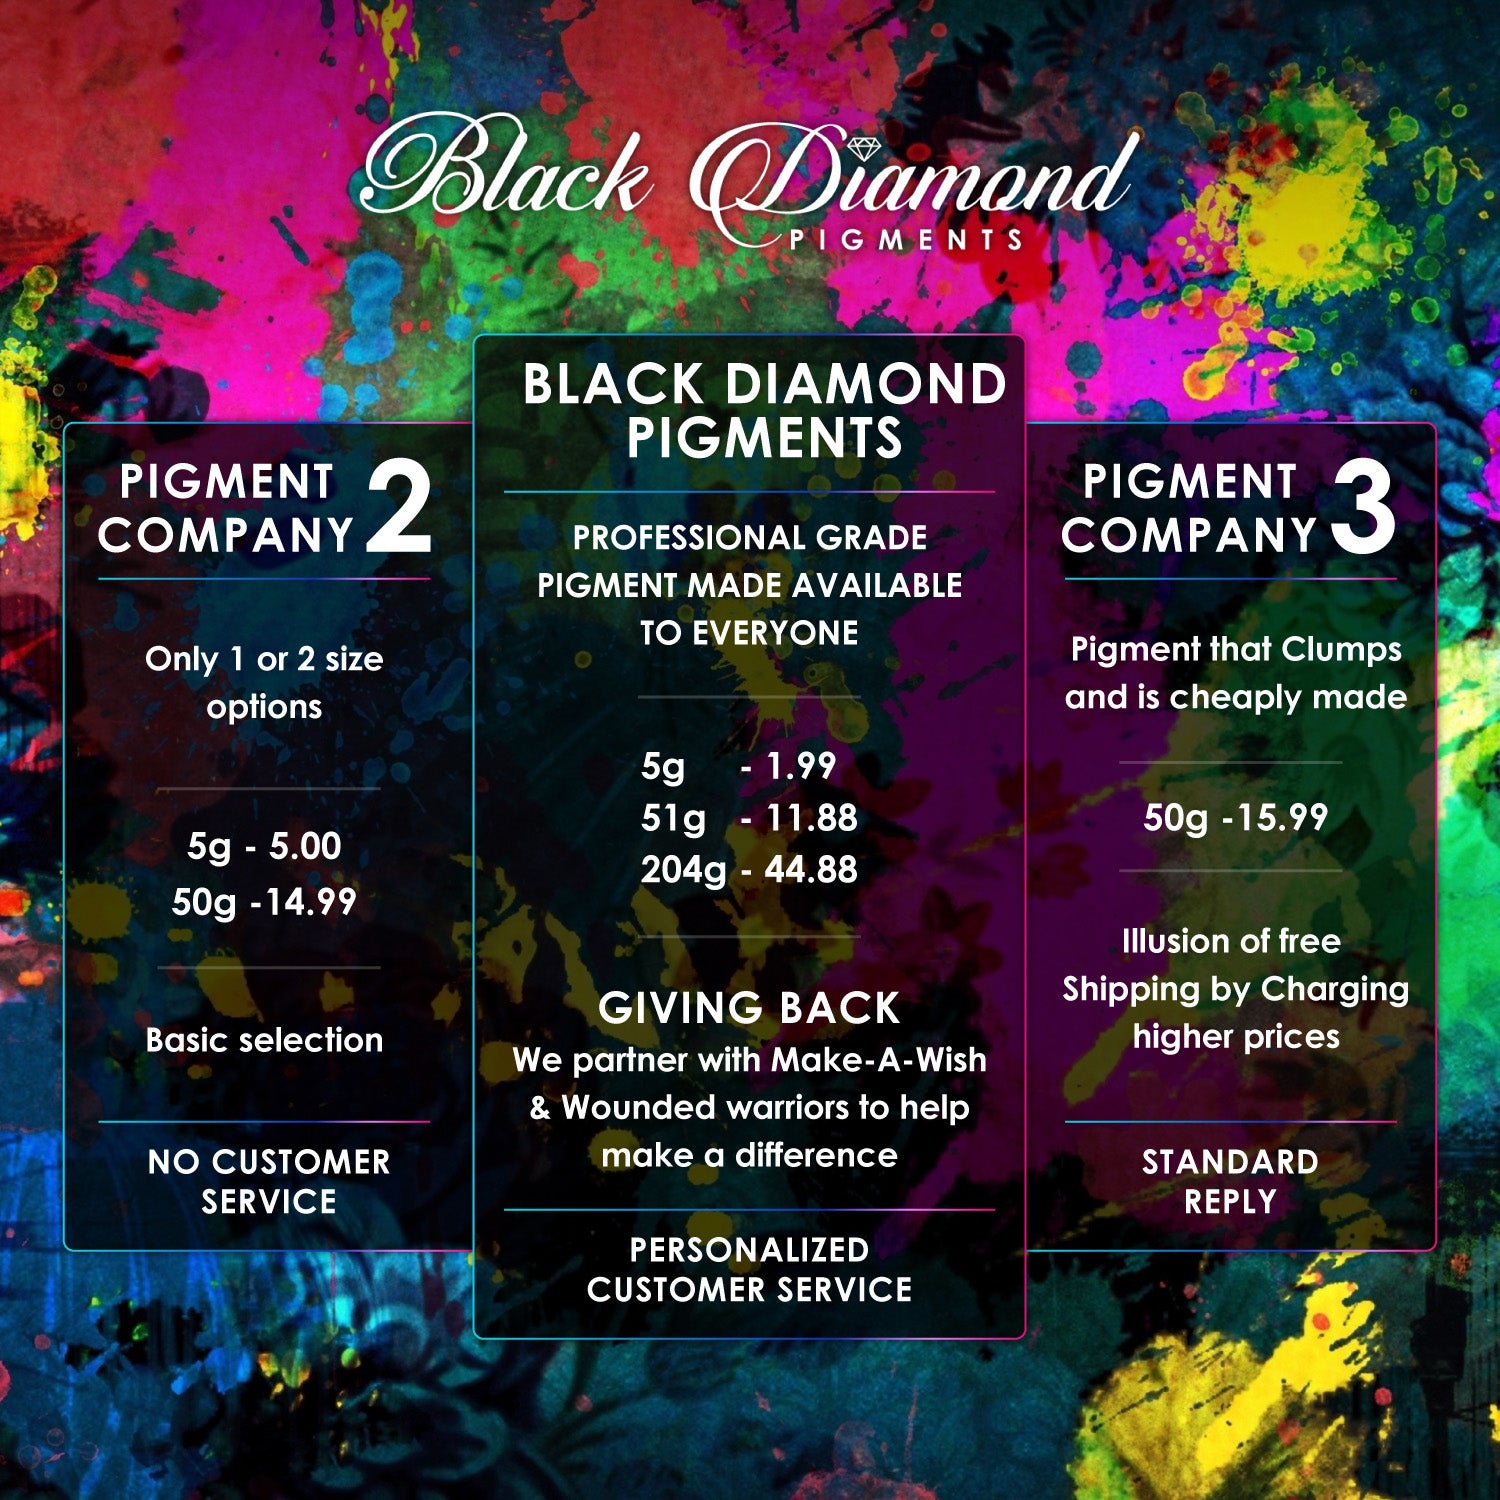 "LIQUIDFIRE" Black Diamond Pigments